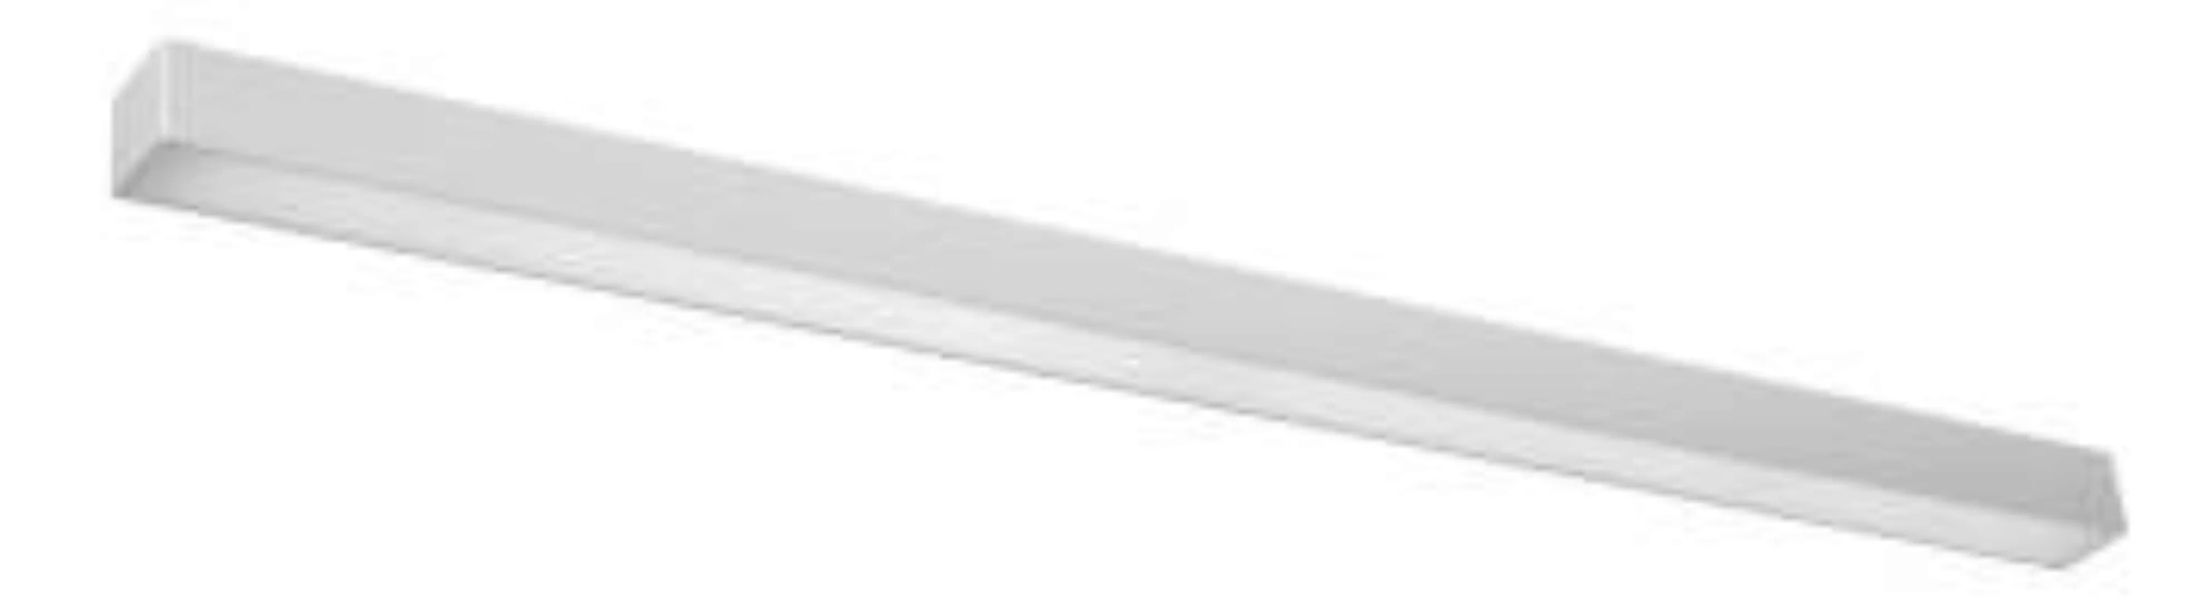 LED Wandlampe Metall Grau 118 cm lang 4000 K Downlight günstig online kaufen